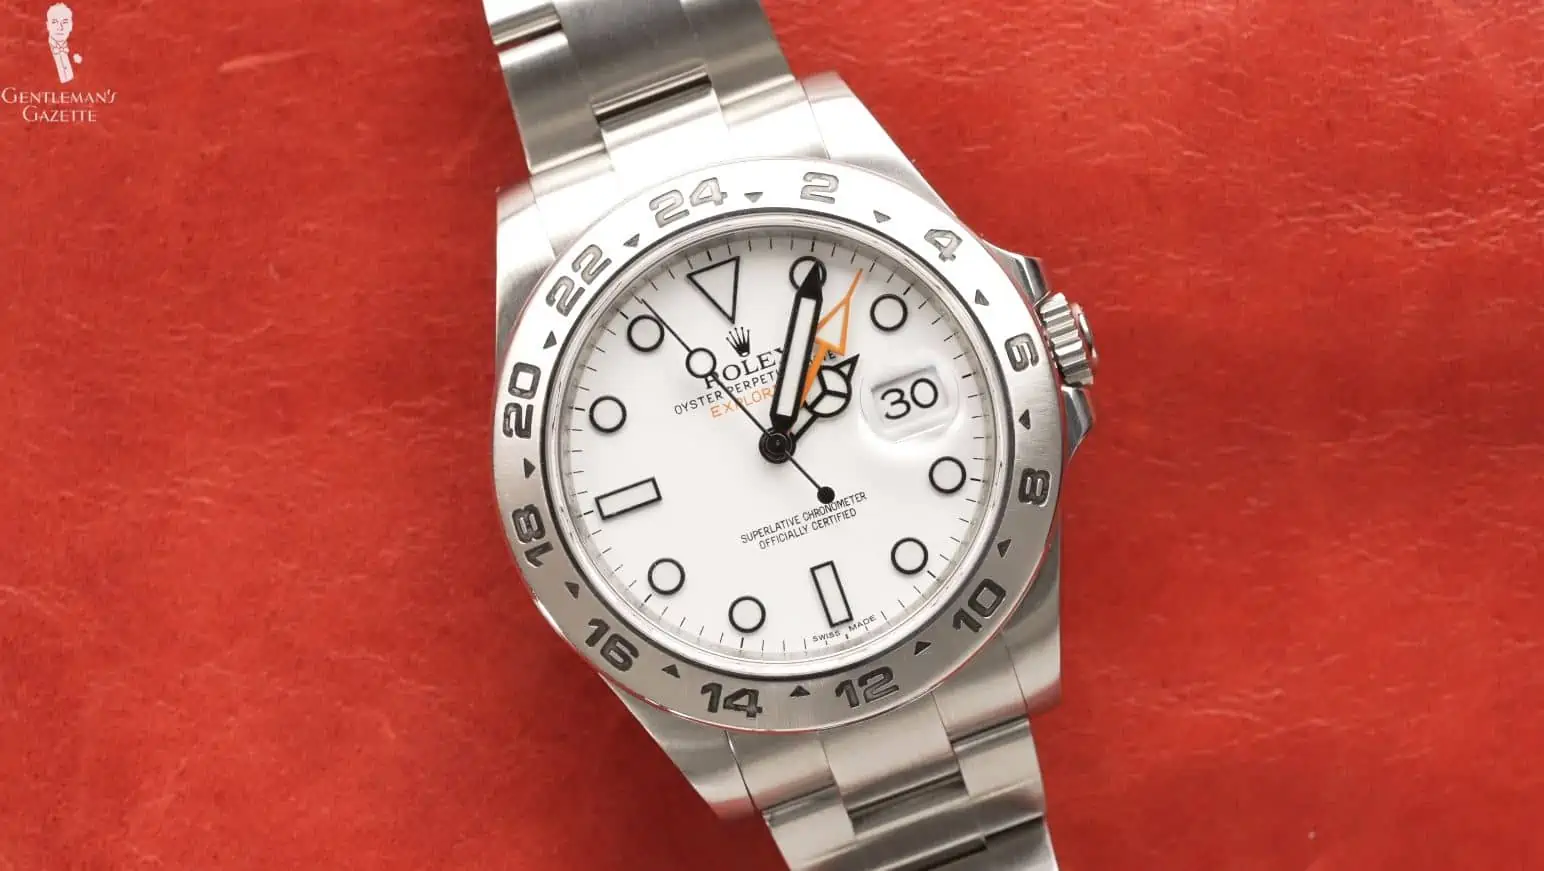 A date window as shown on a Rolex watch